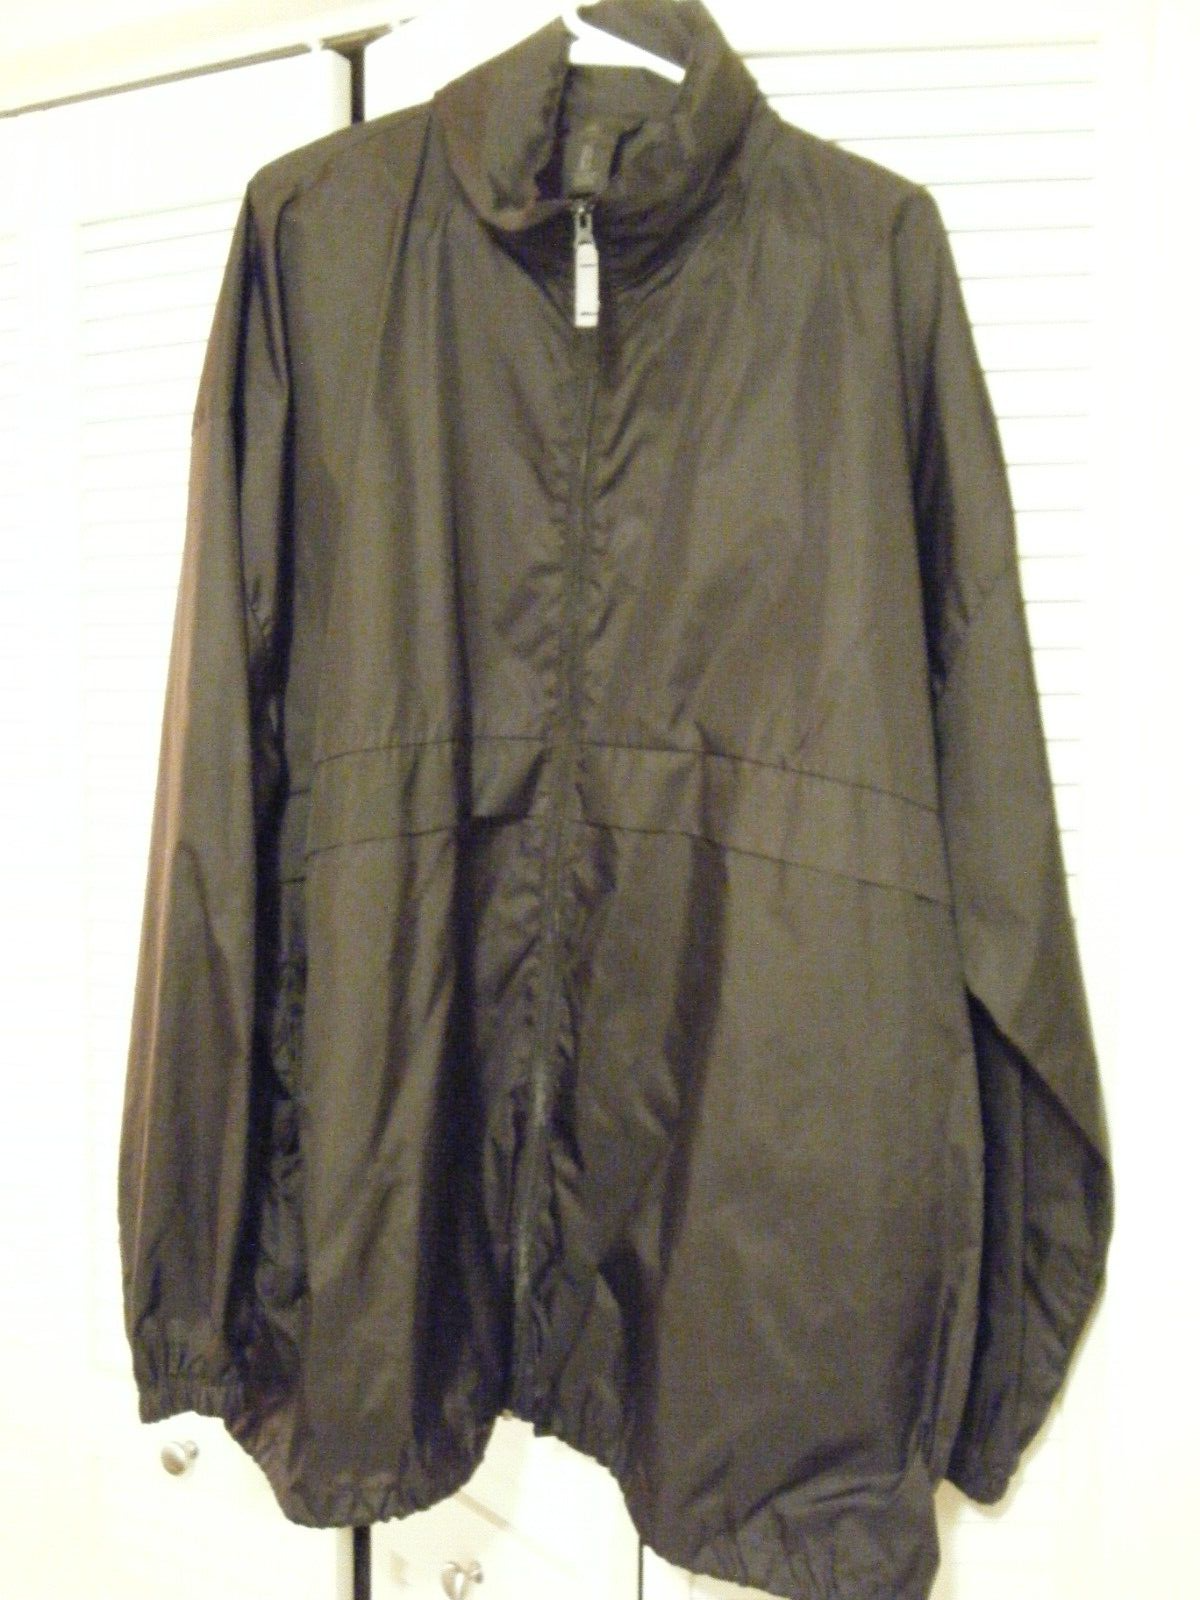 Primary image for B & C Sirocco Green Wind-breaker Jacket waterproof nylon hooded Size 3XL #30Box1